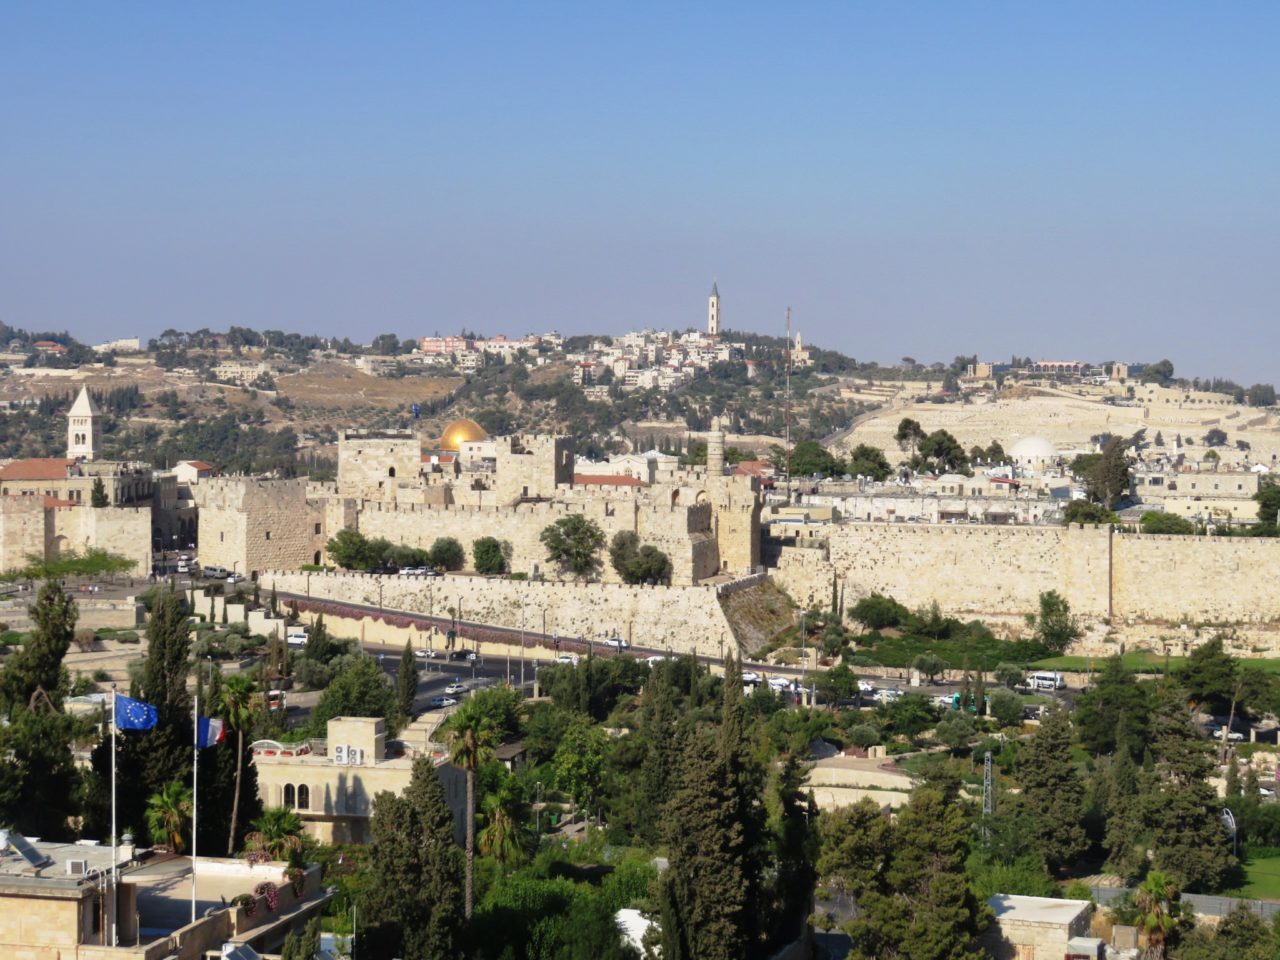 King David Hotel, Jerusalem Israel - View of old city of Jerusalem and Mount of Olives from King David Hotel